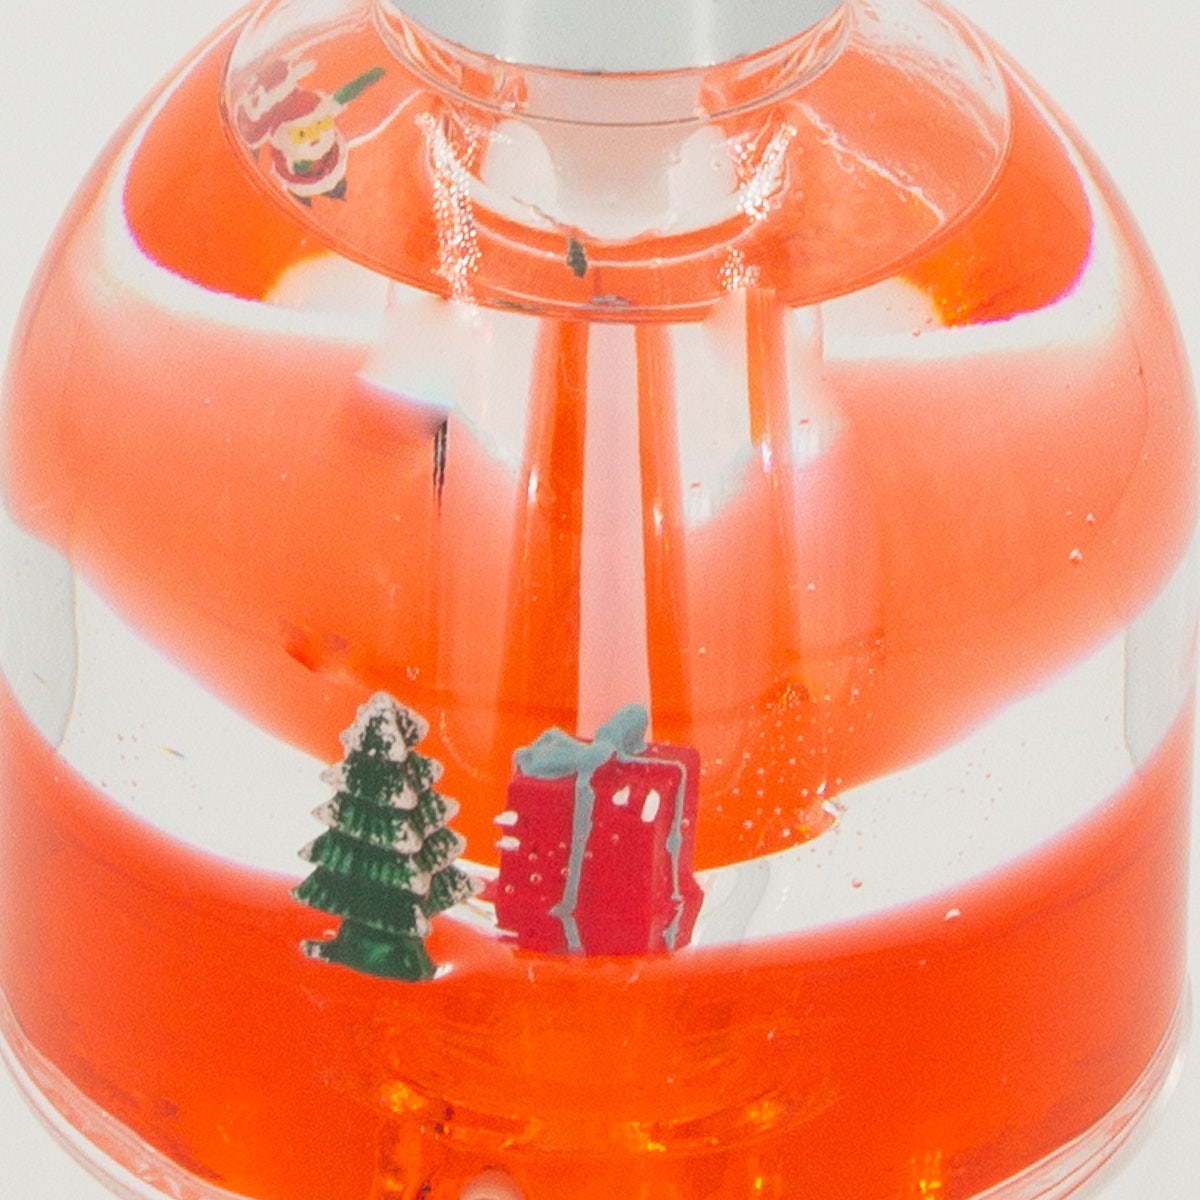 Holiday Scene Soap/Lotion Pump Bottle - Santa or Snowman